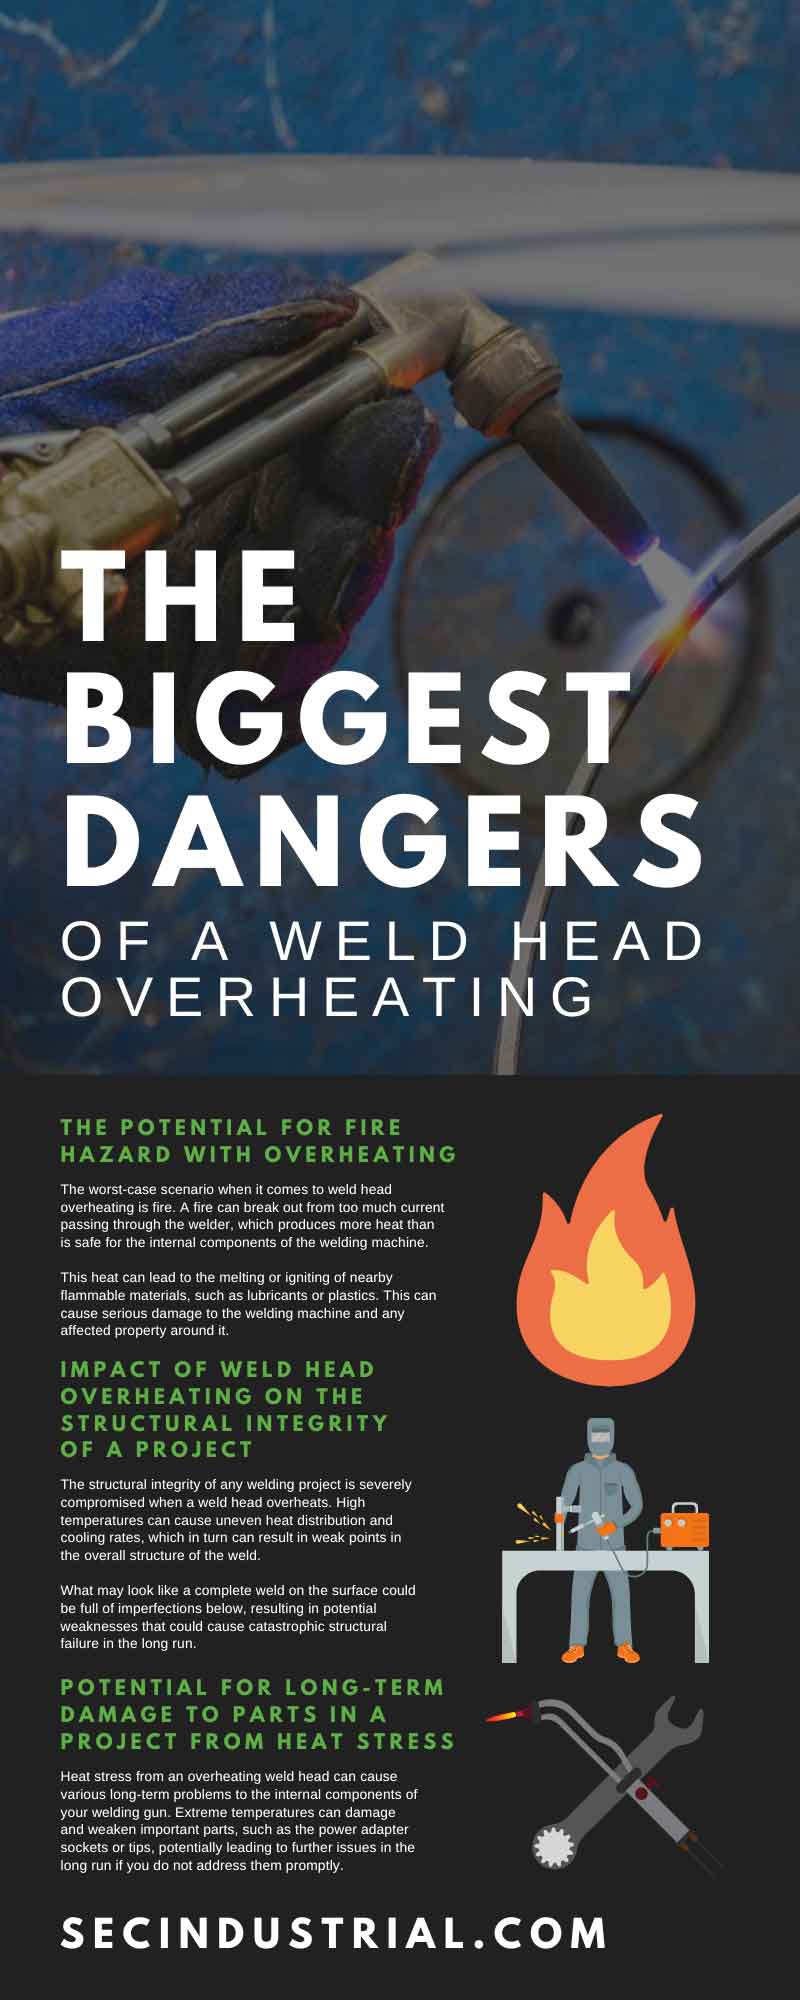 The Biggest Dangers of a Weld Head Overheating